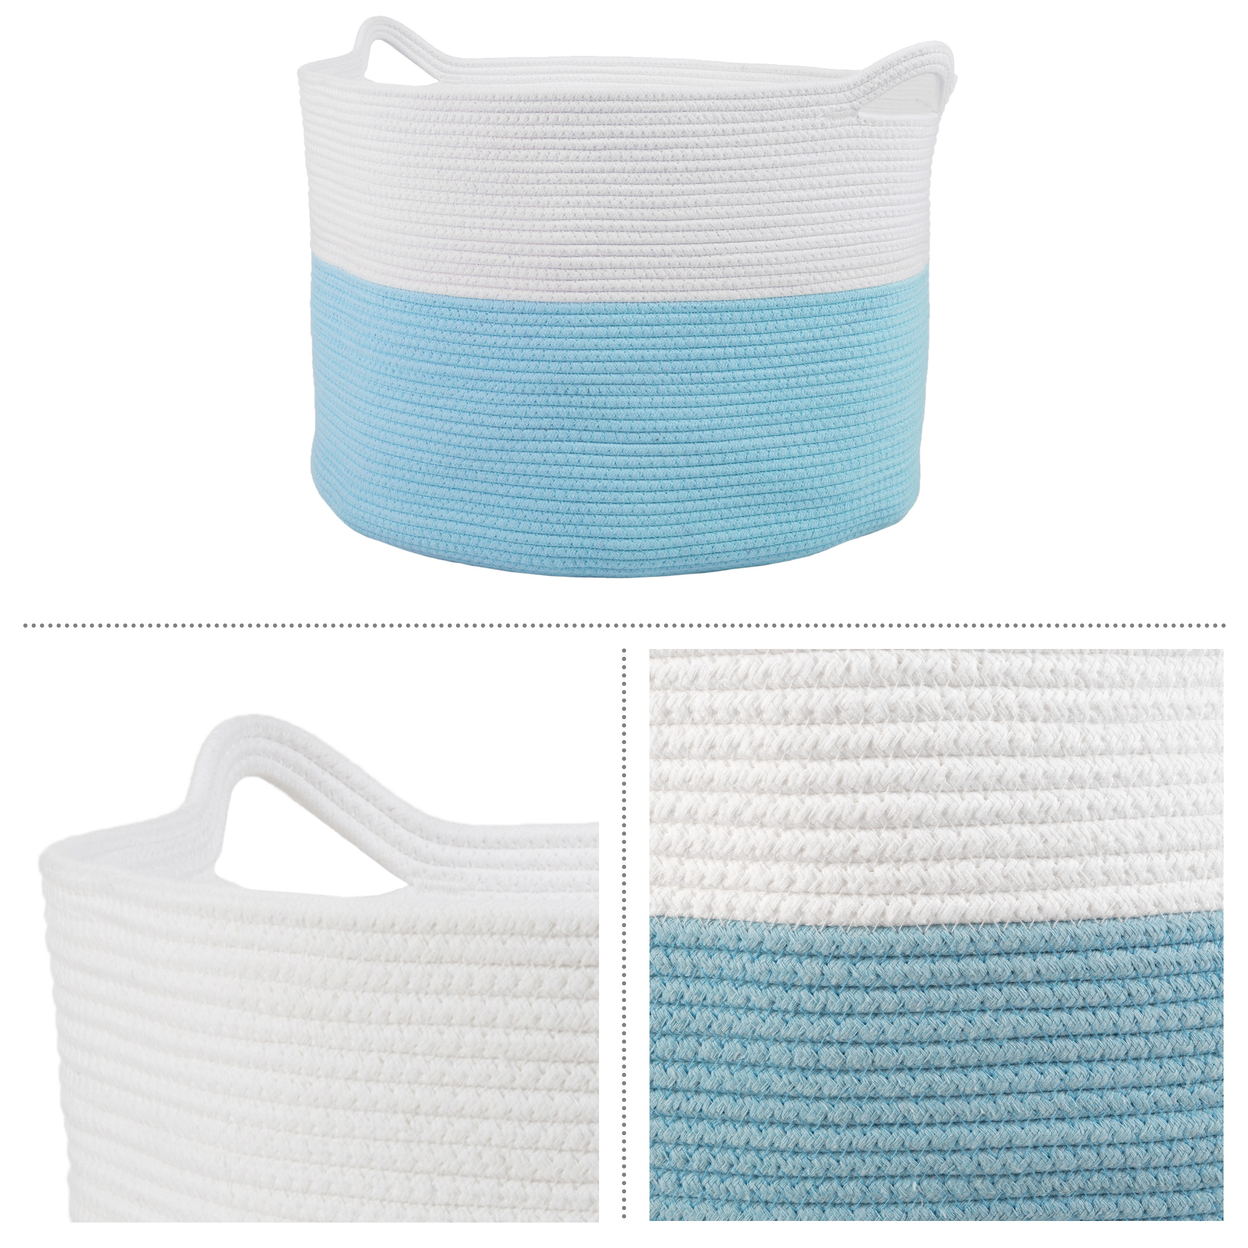 XL Laundry Basket Cotton Rope Clothes Basket Handles Home Storage Dcor